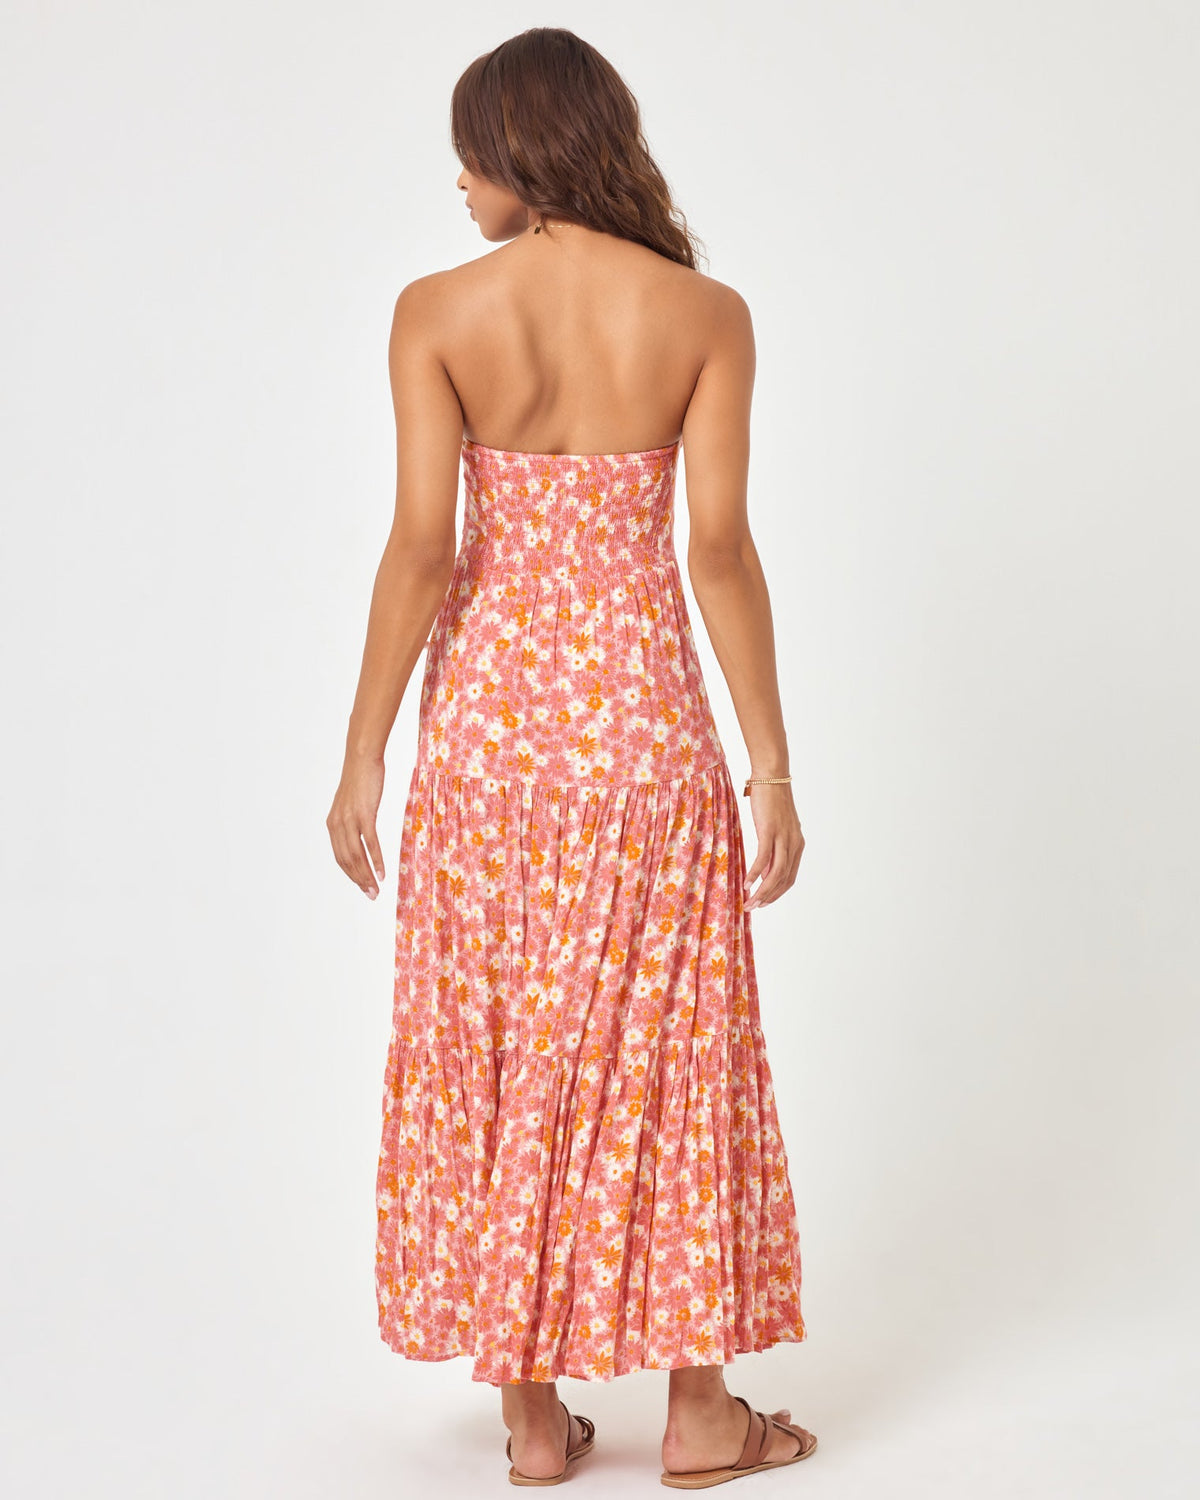 Alessandra Dress - Baskin In Blooms When In Bloom | Model: Natalie (size: S)